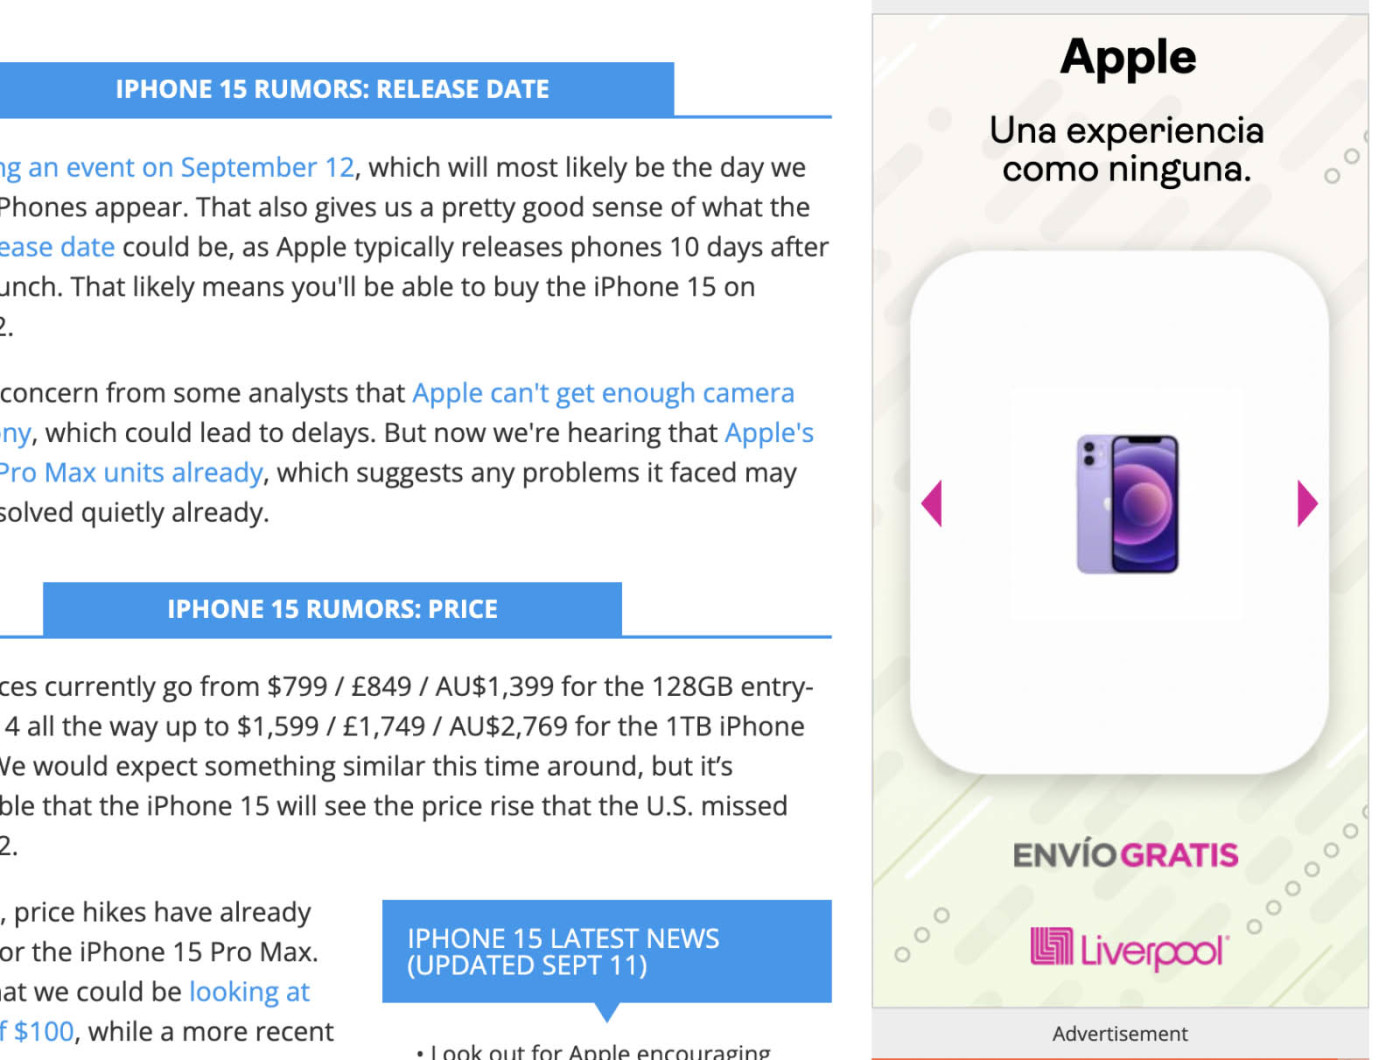 Screenshot of a Liverpool Apple ad describing iPhone 15 rumors.